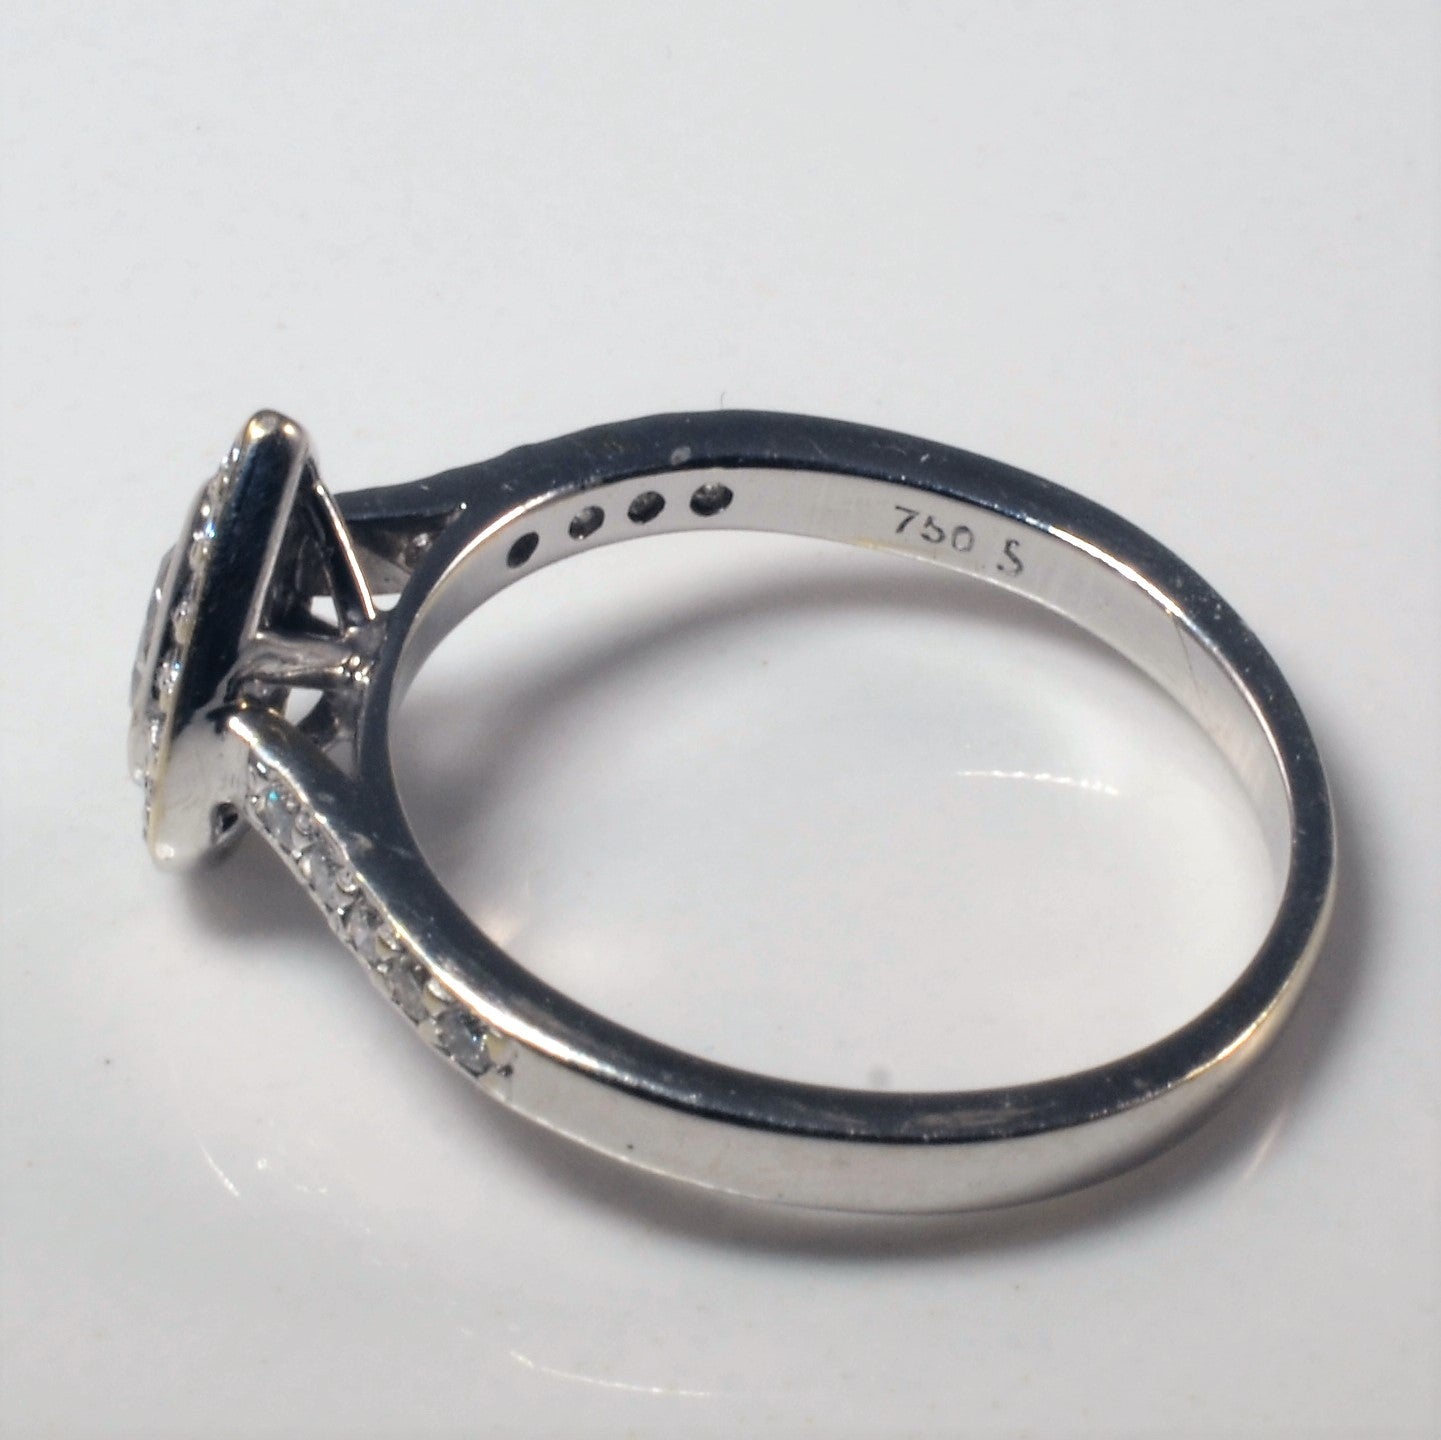 Pear Cut Diamond Halo Engagement Ring | 0.54ctw | SZ 6 |